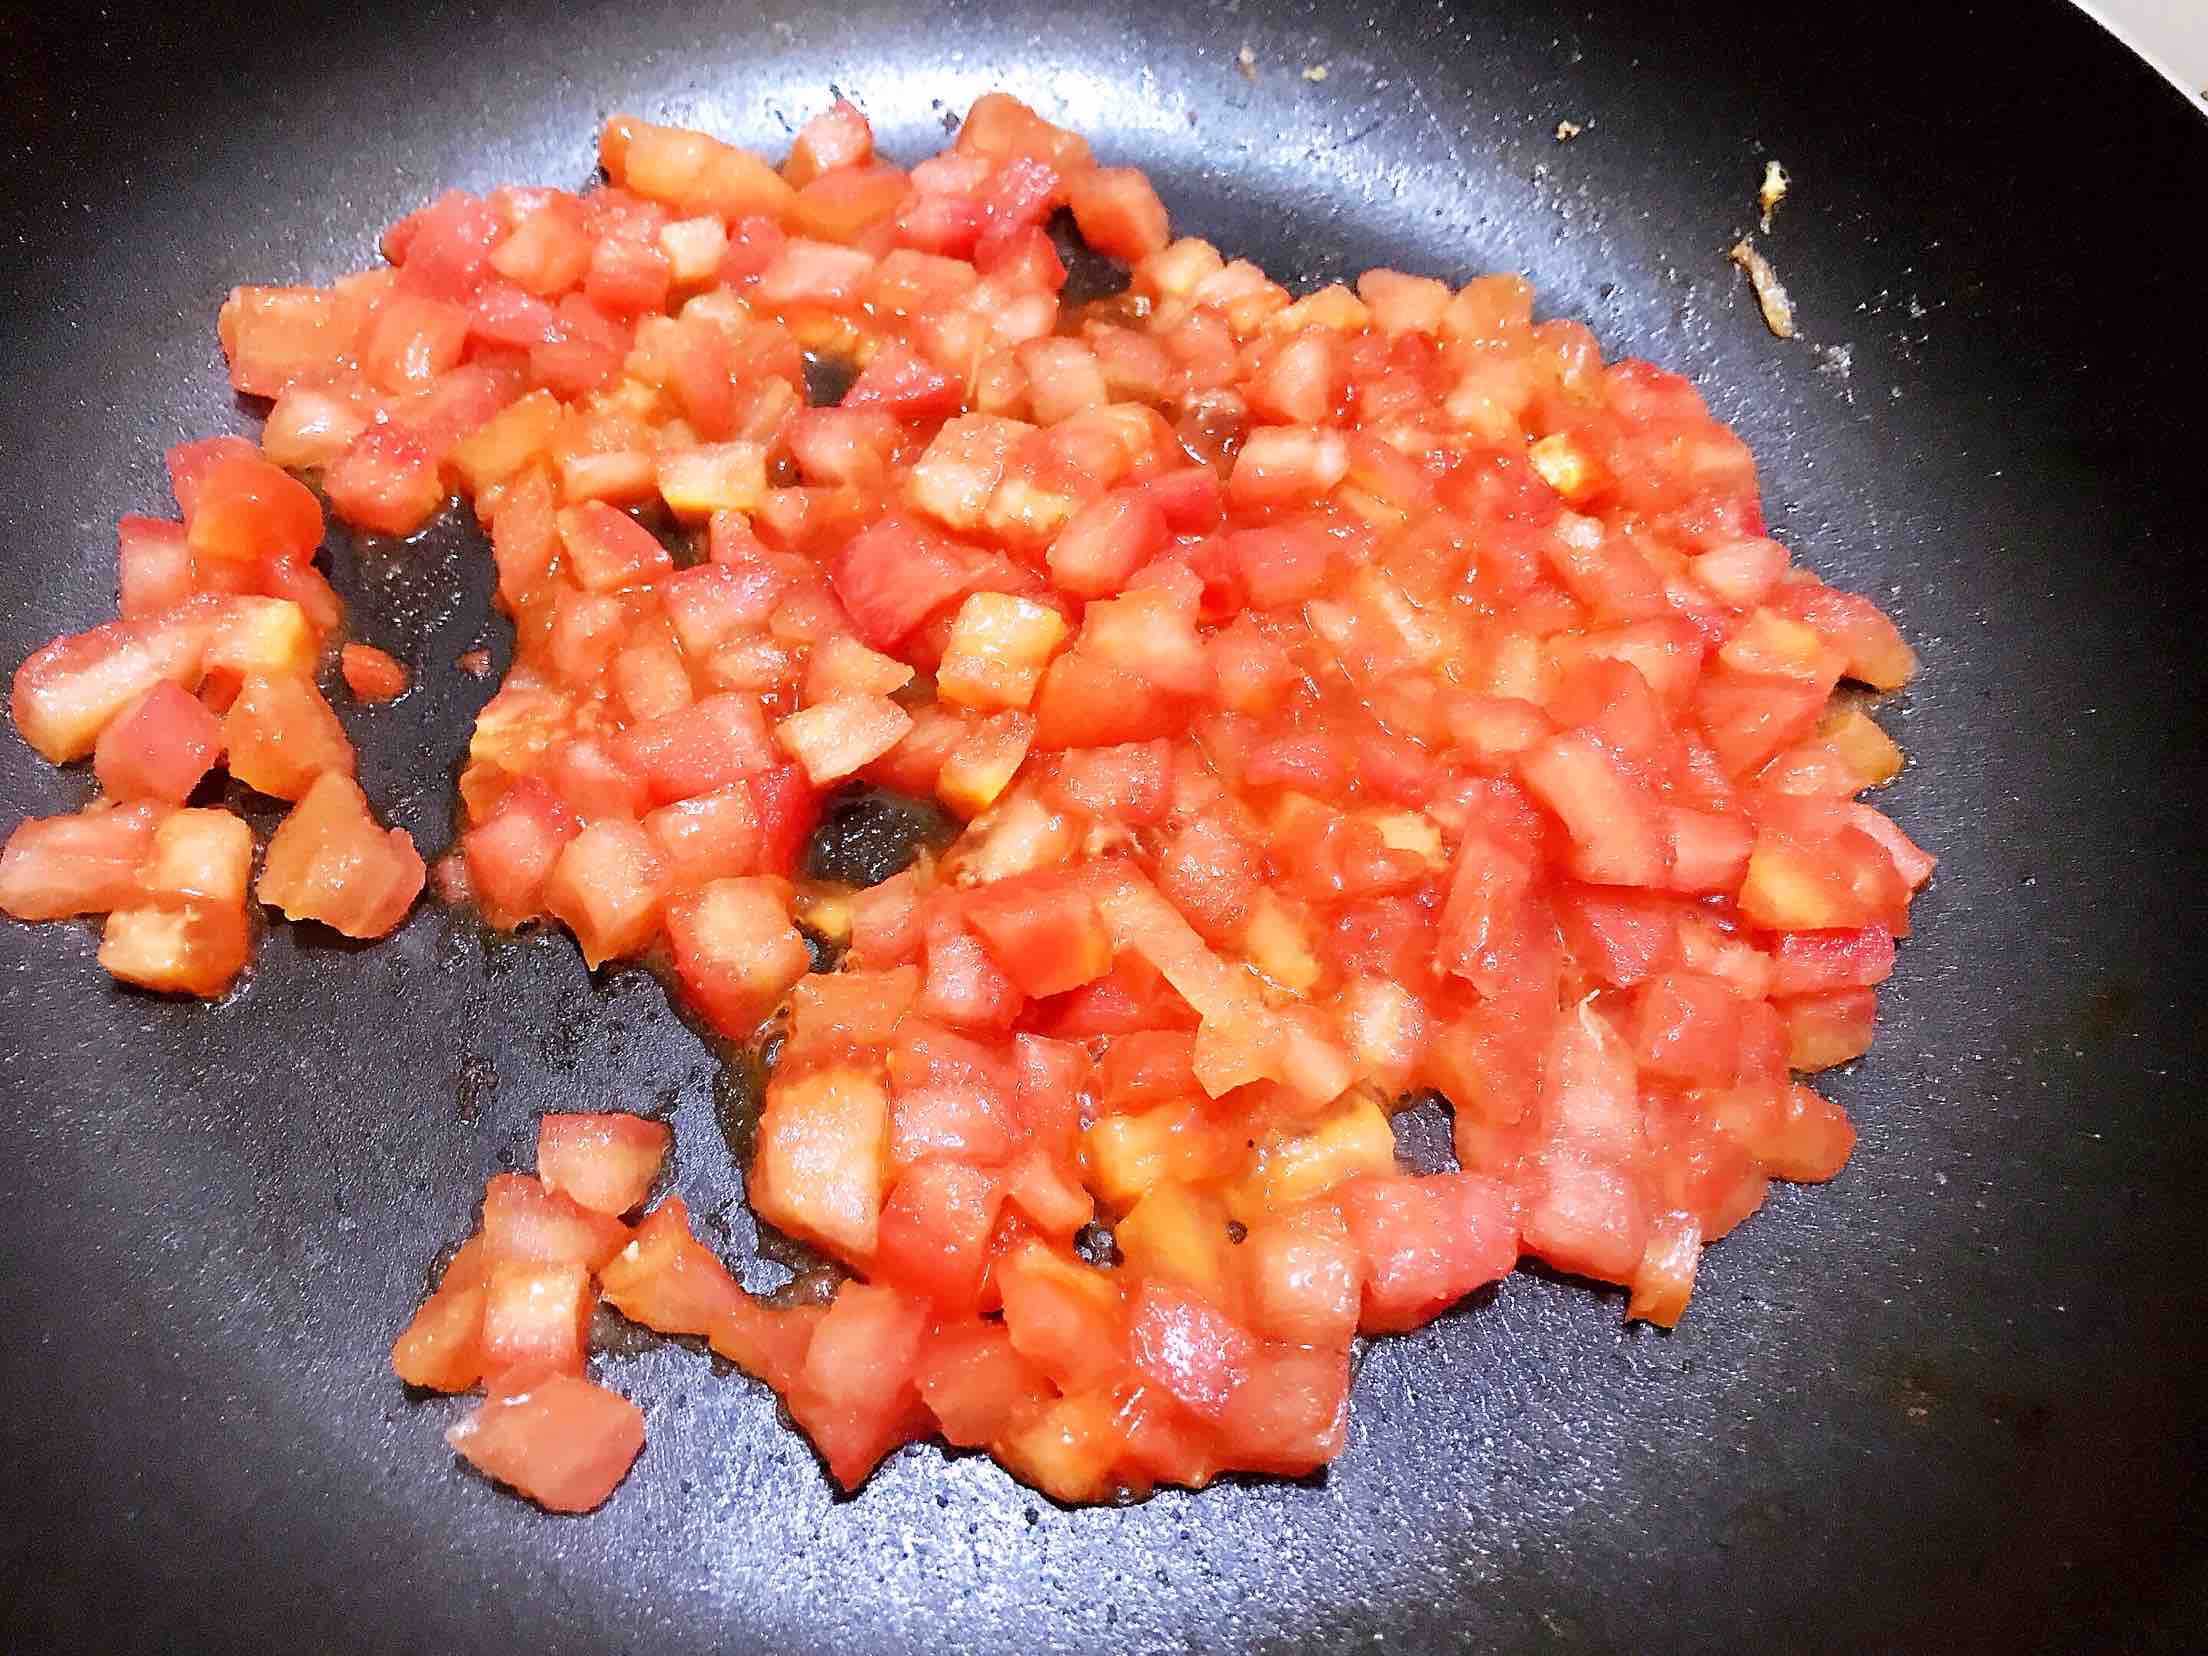 National Dish Tomato Scrambled Eggs recipe